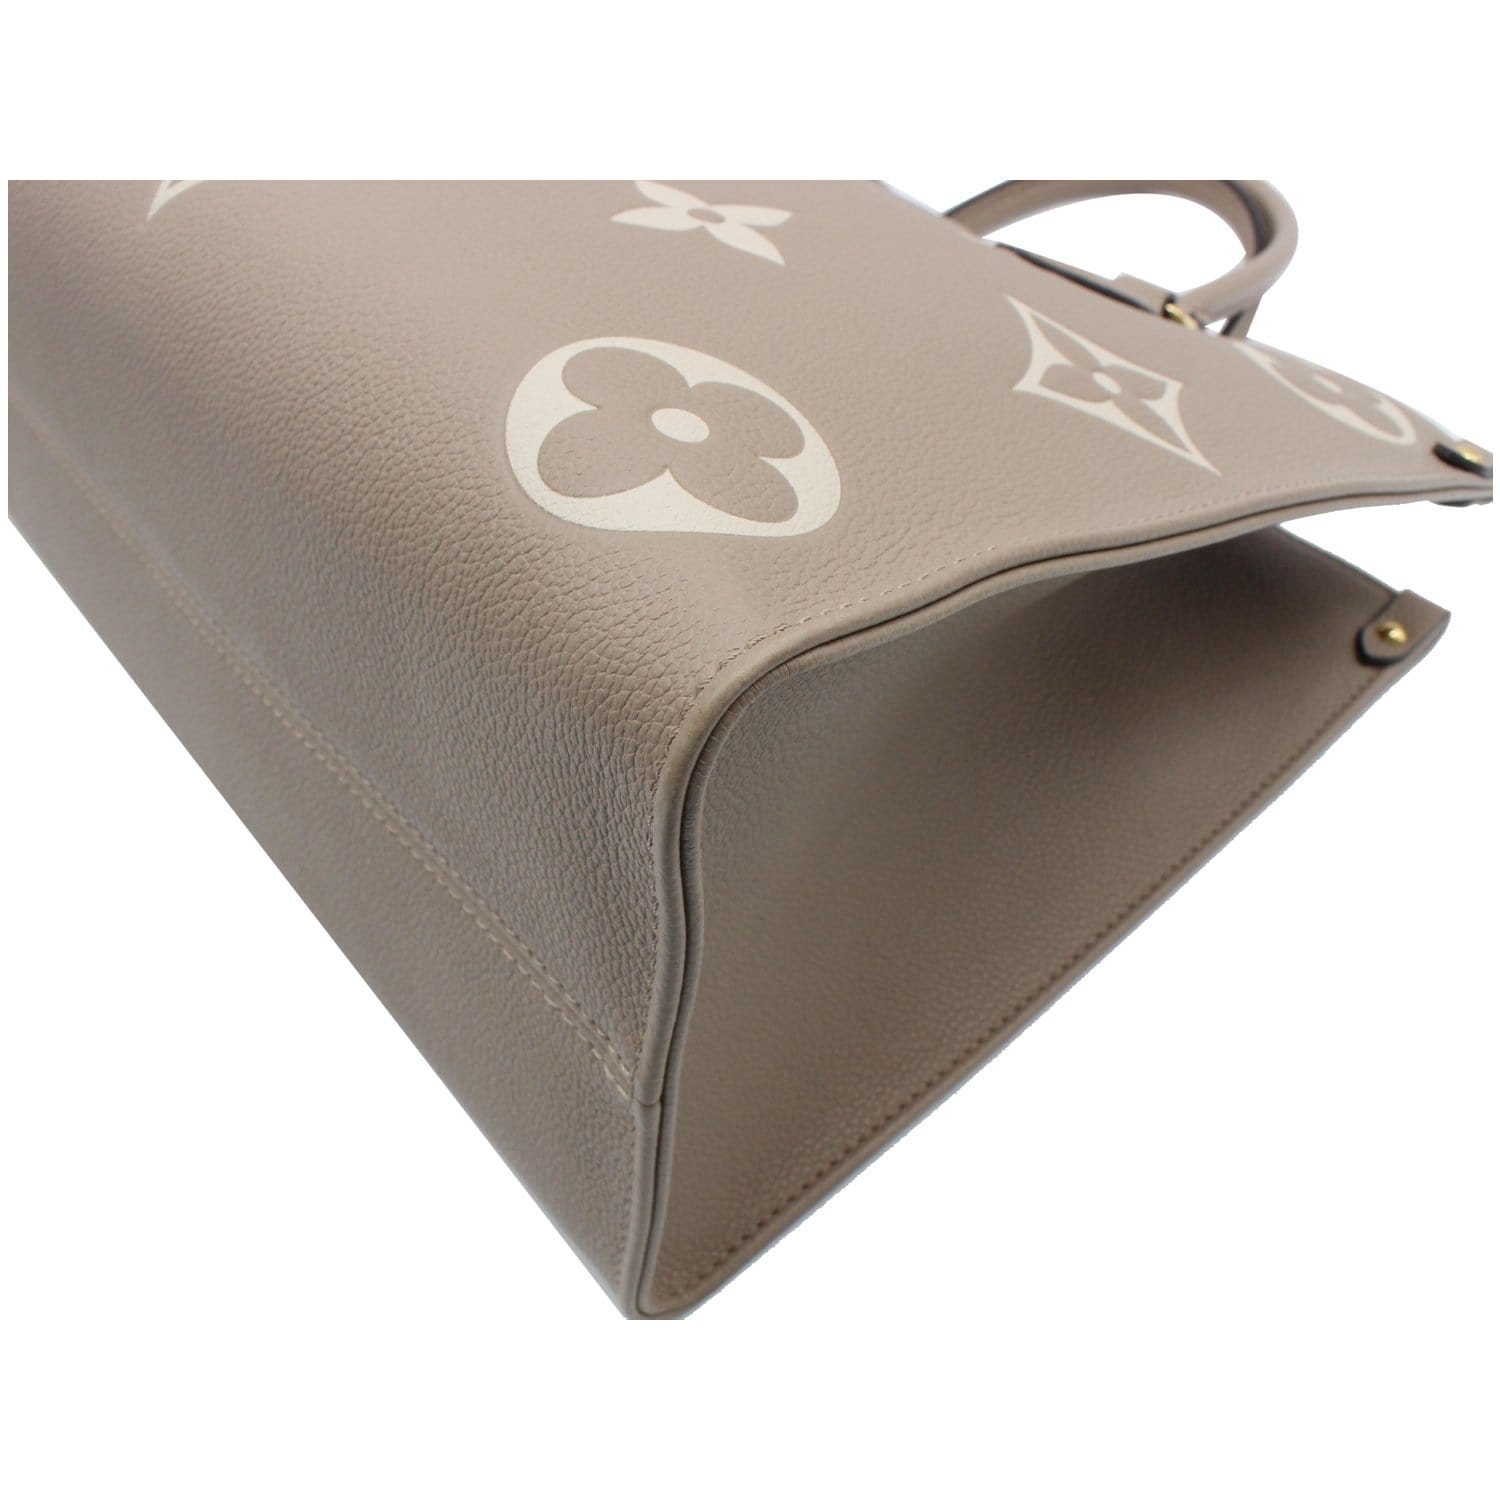 OnTheGo GM Bicolor Monogram Empreinte Leather - Handbags